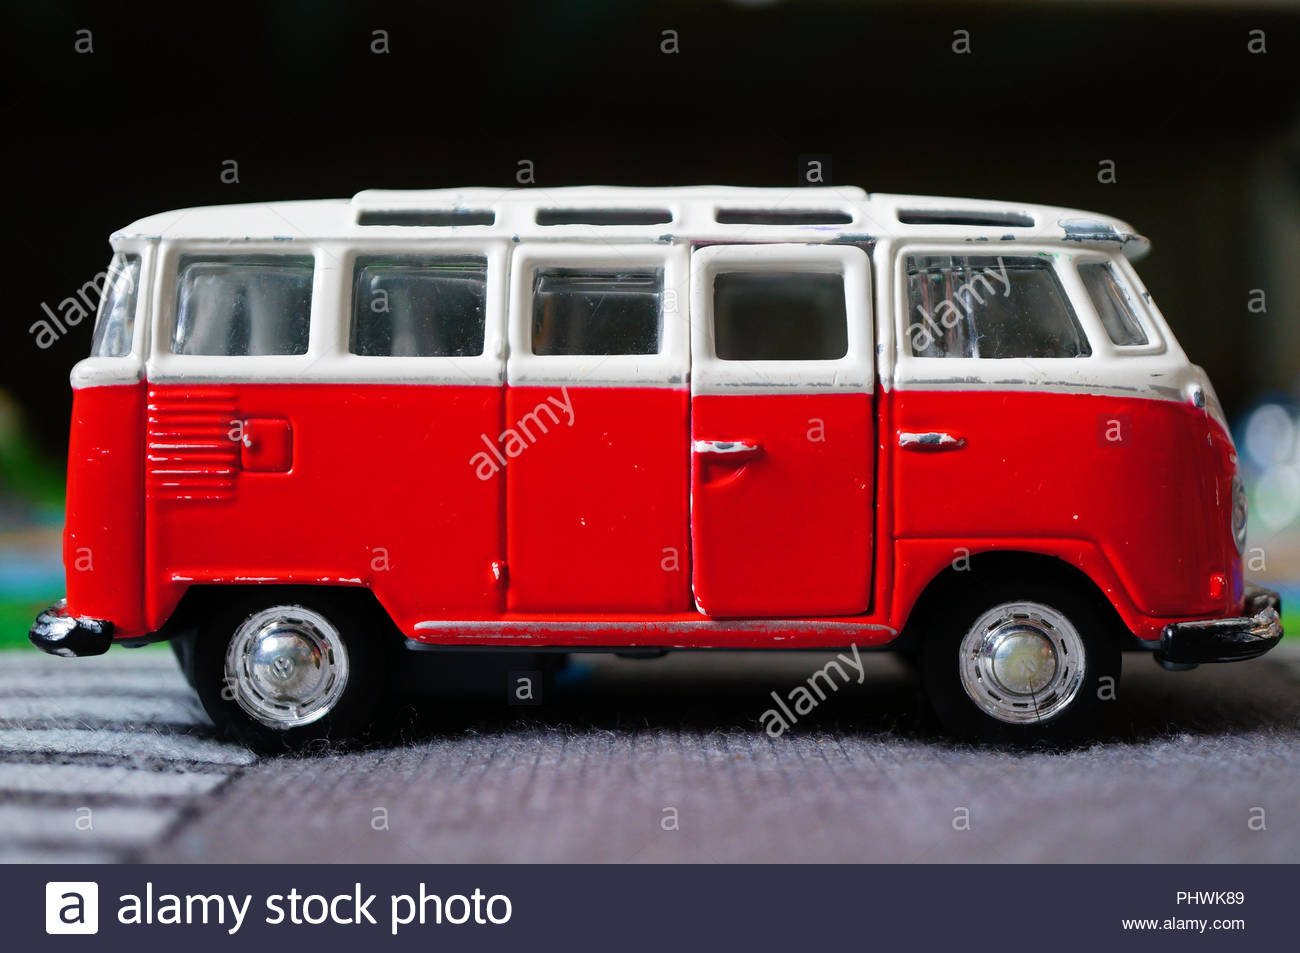 white van toy car